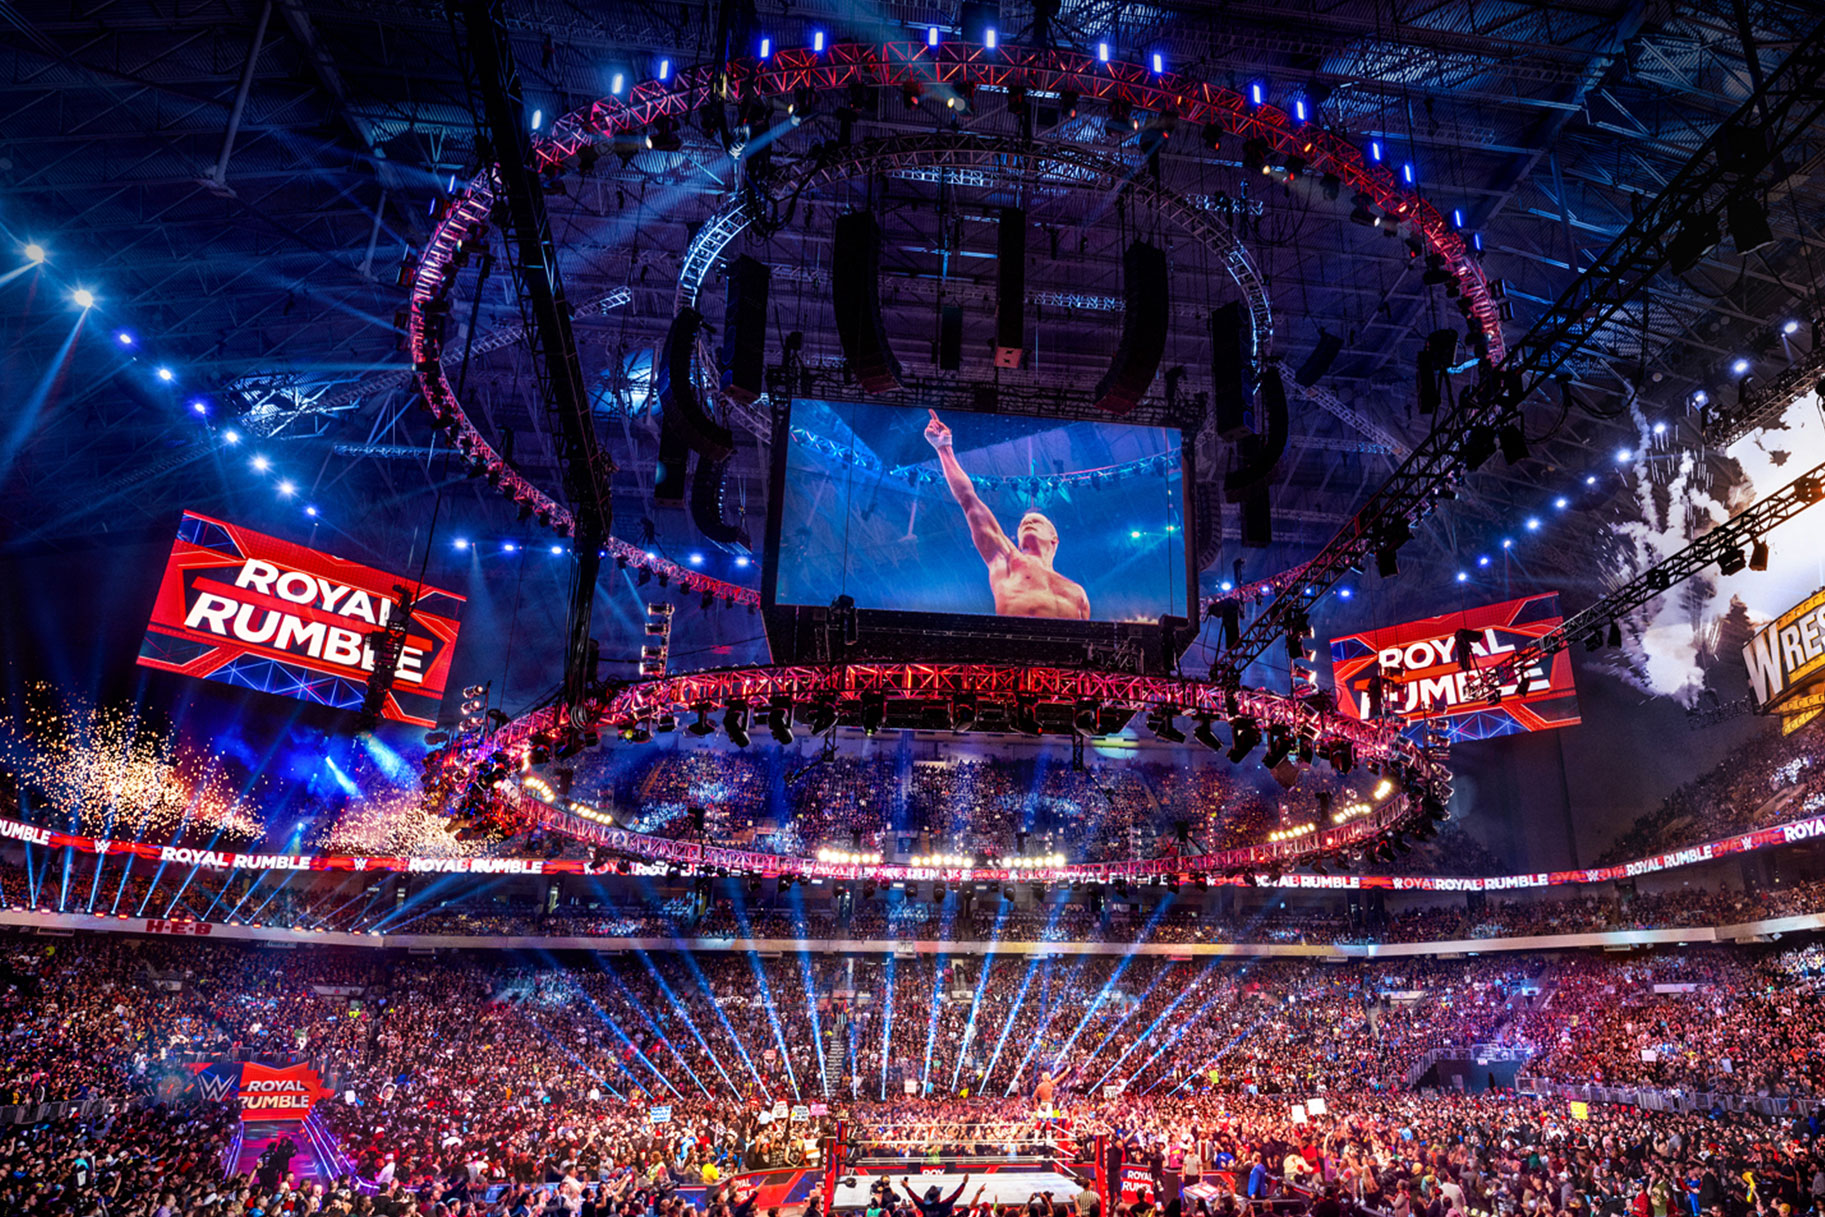 Stadium view of Royal Rumble 2022.